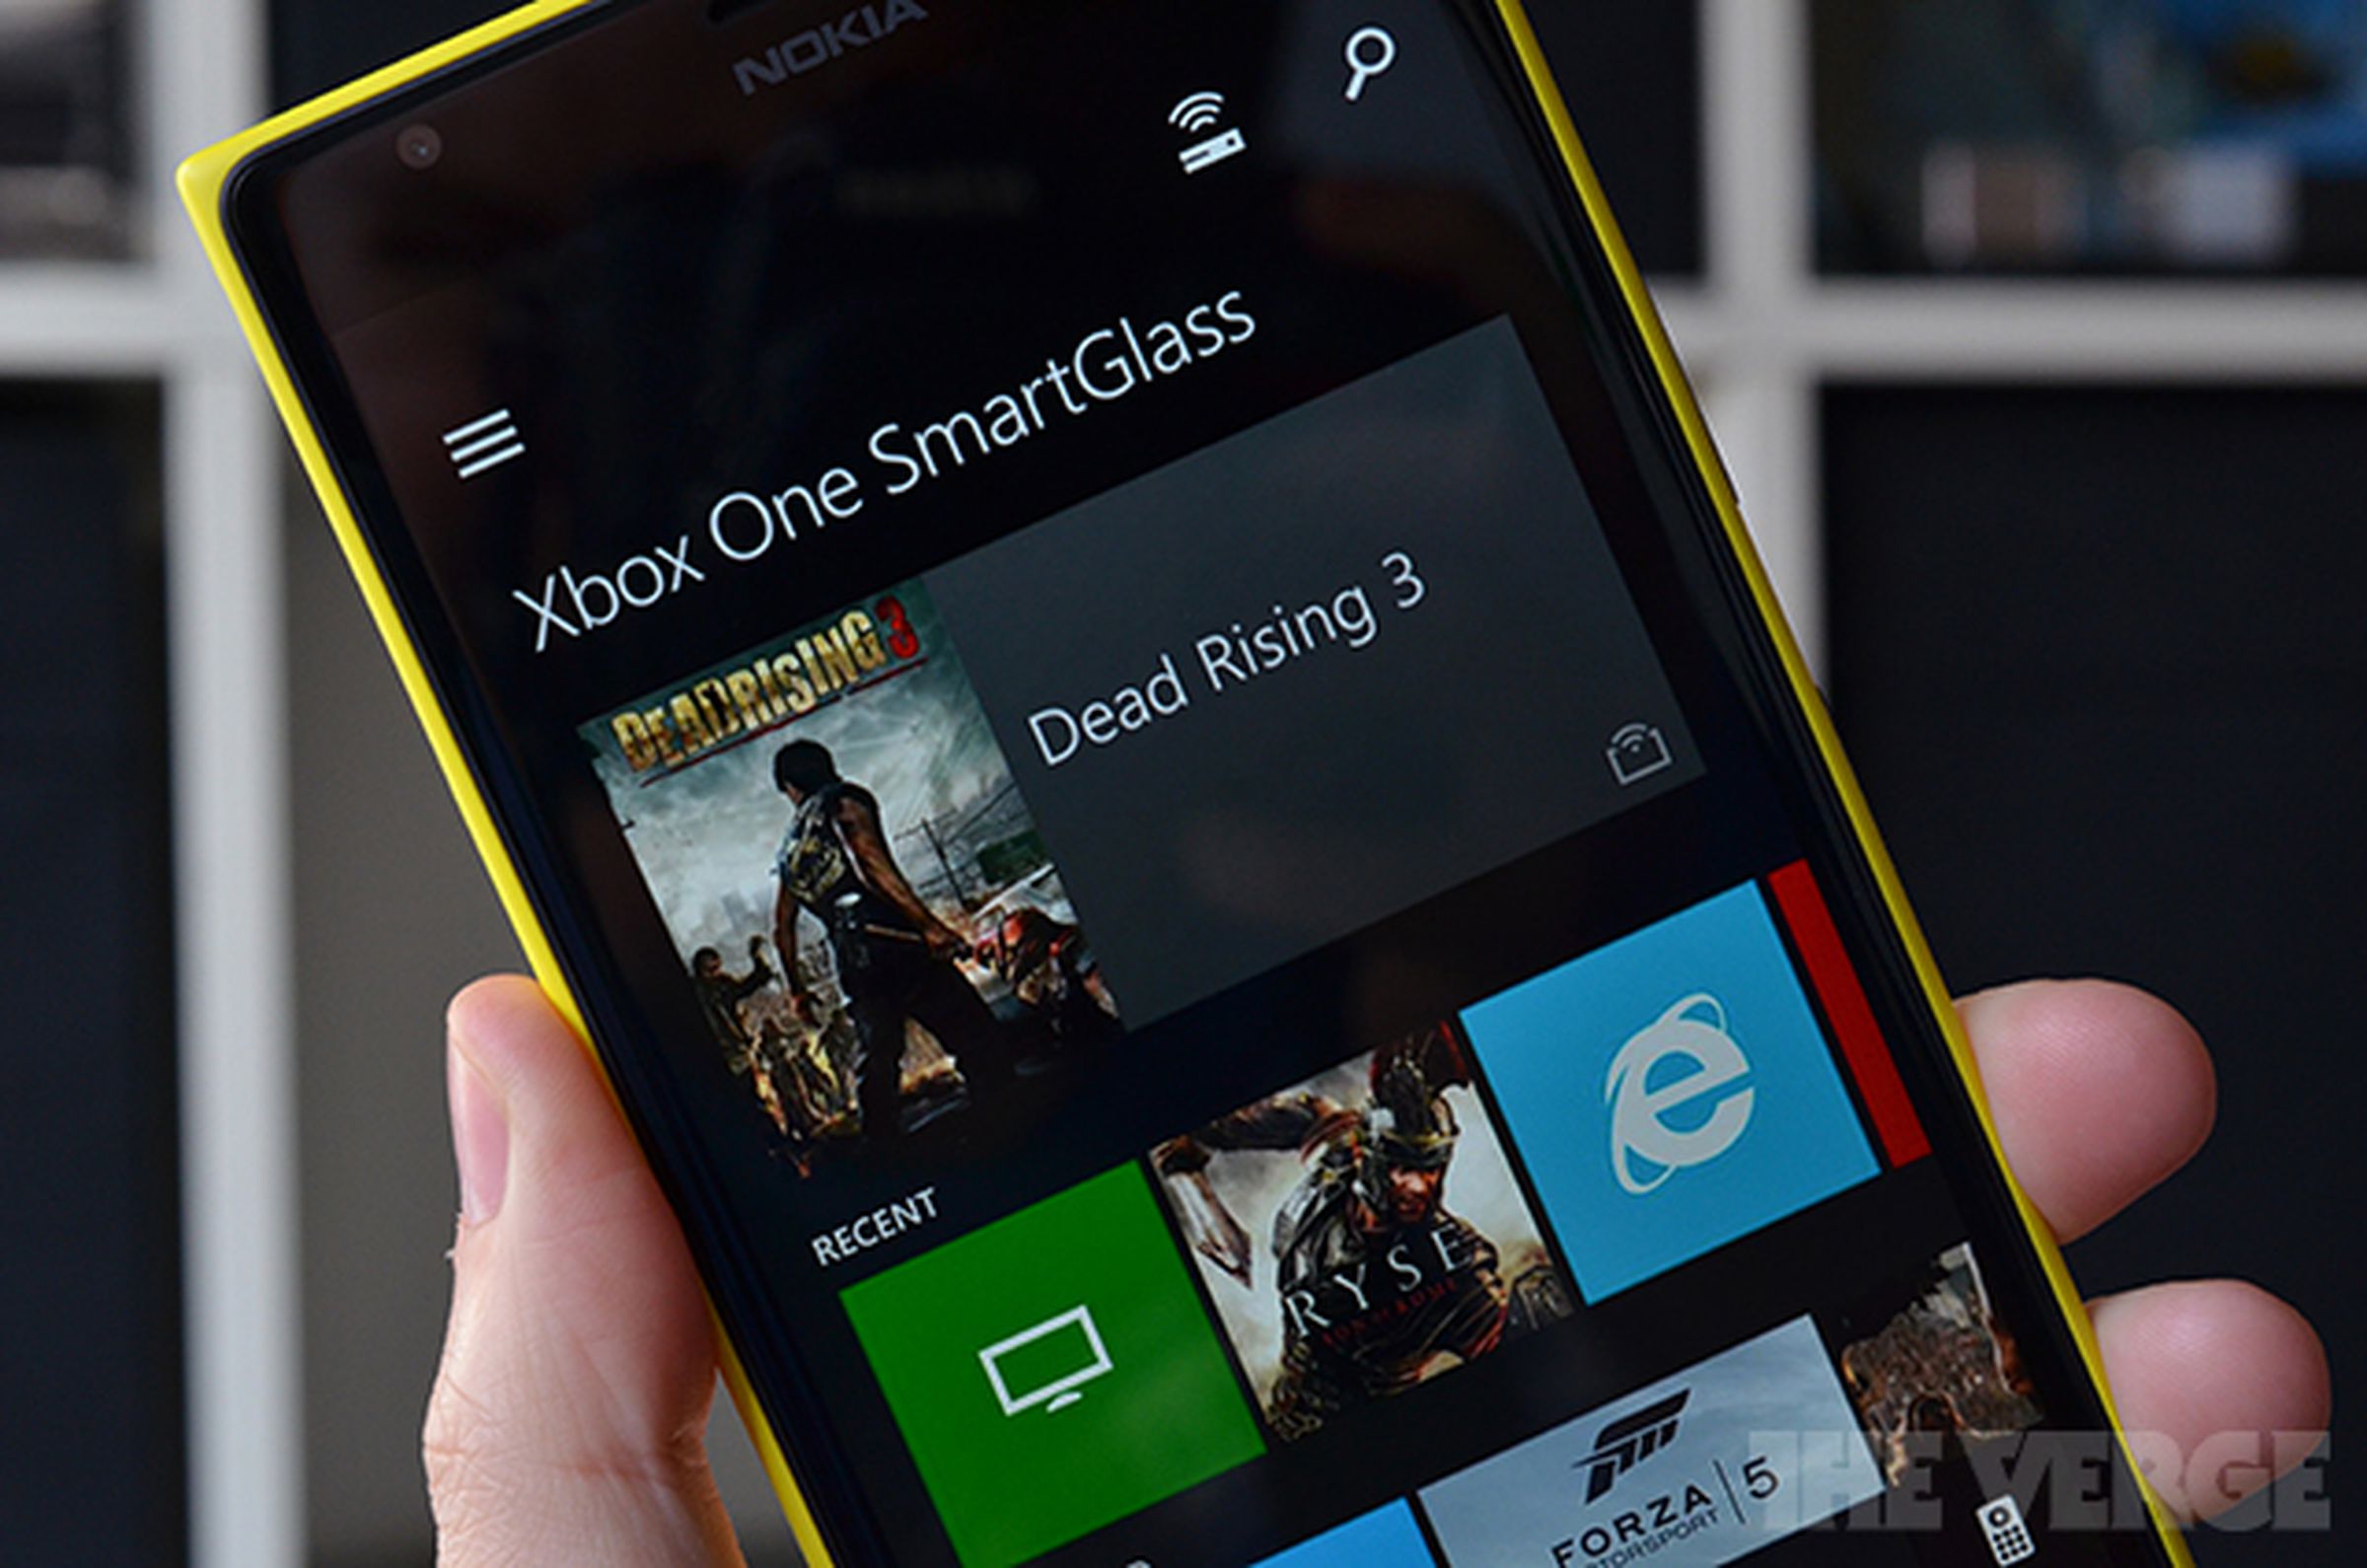 Xbox One SmartGlass screenshots